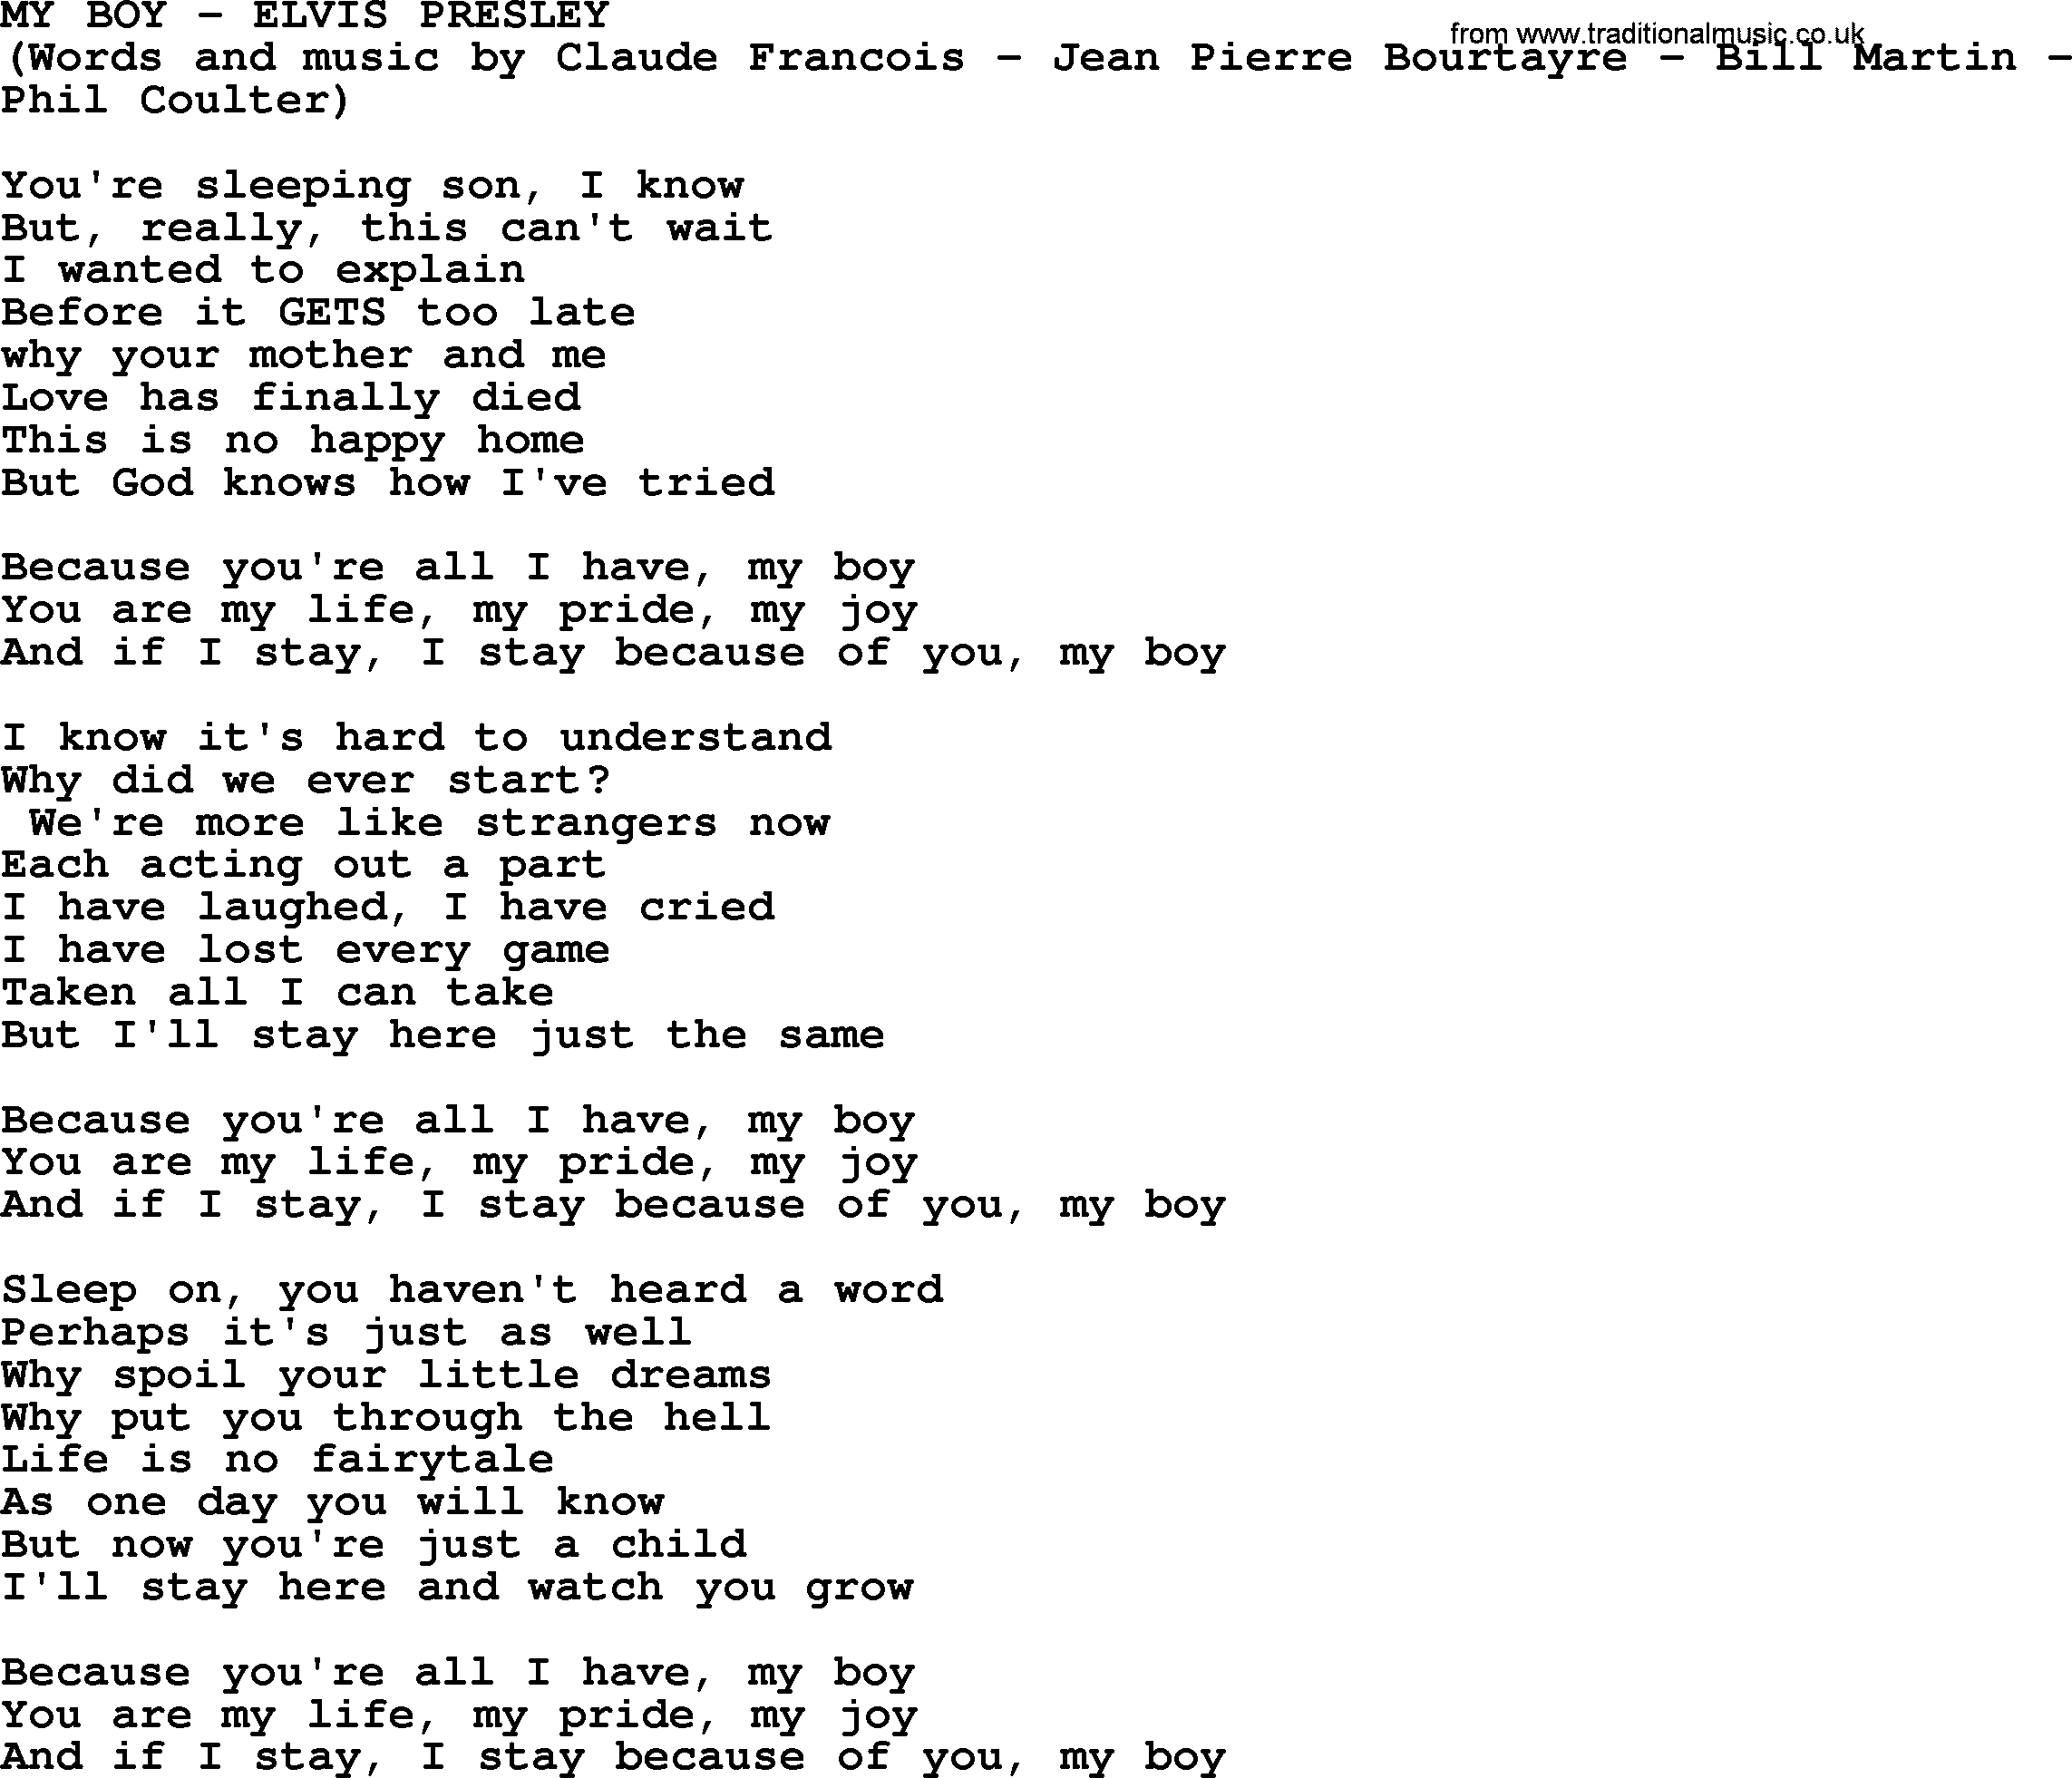 Elvis Presley song: My Boy lyrics